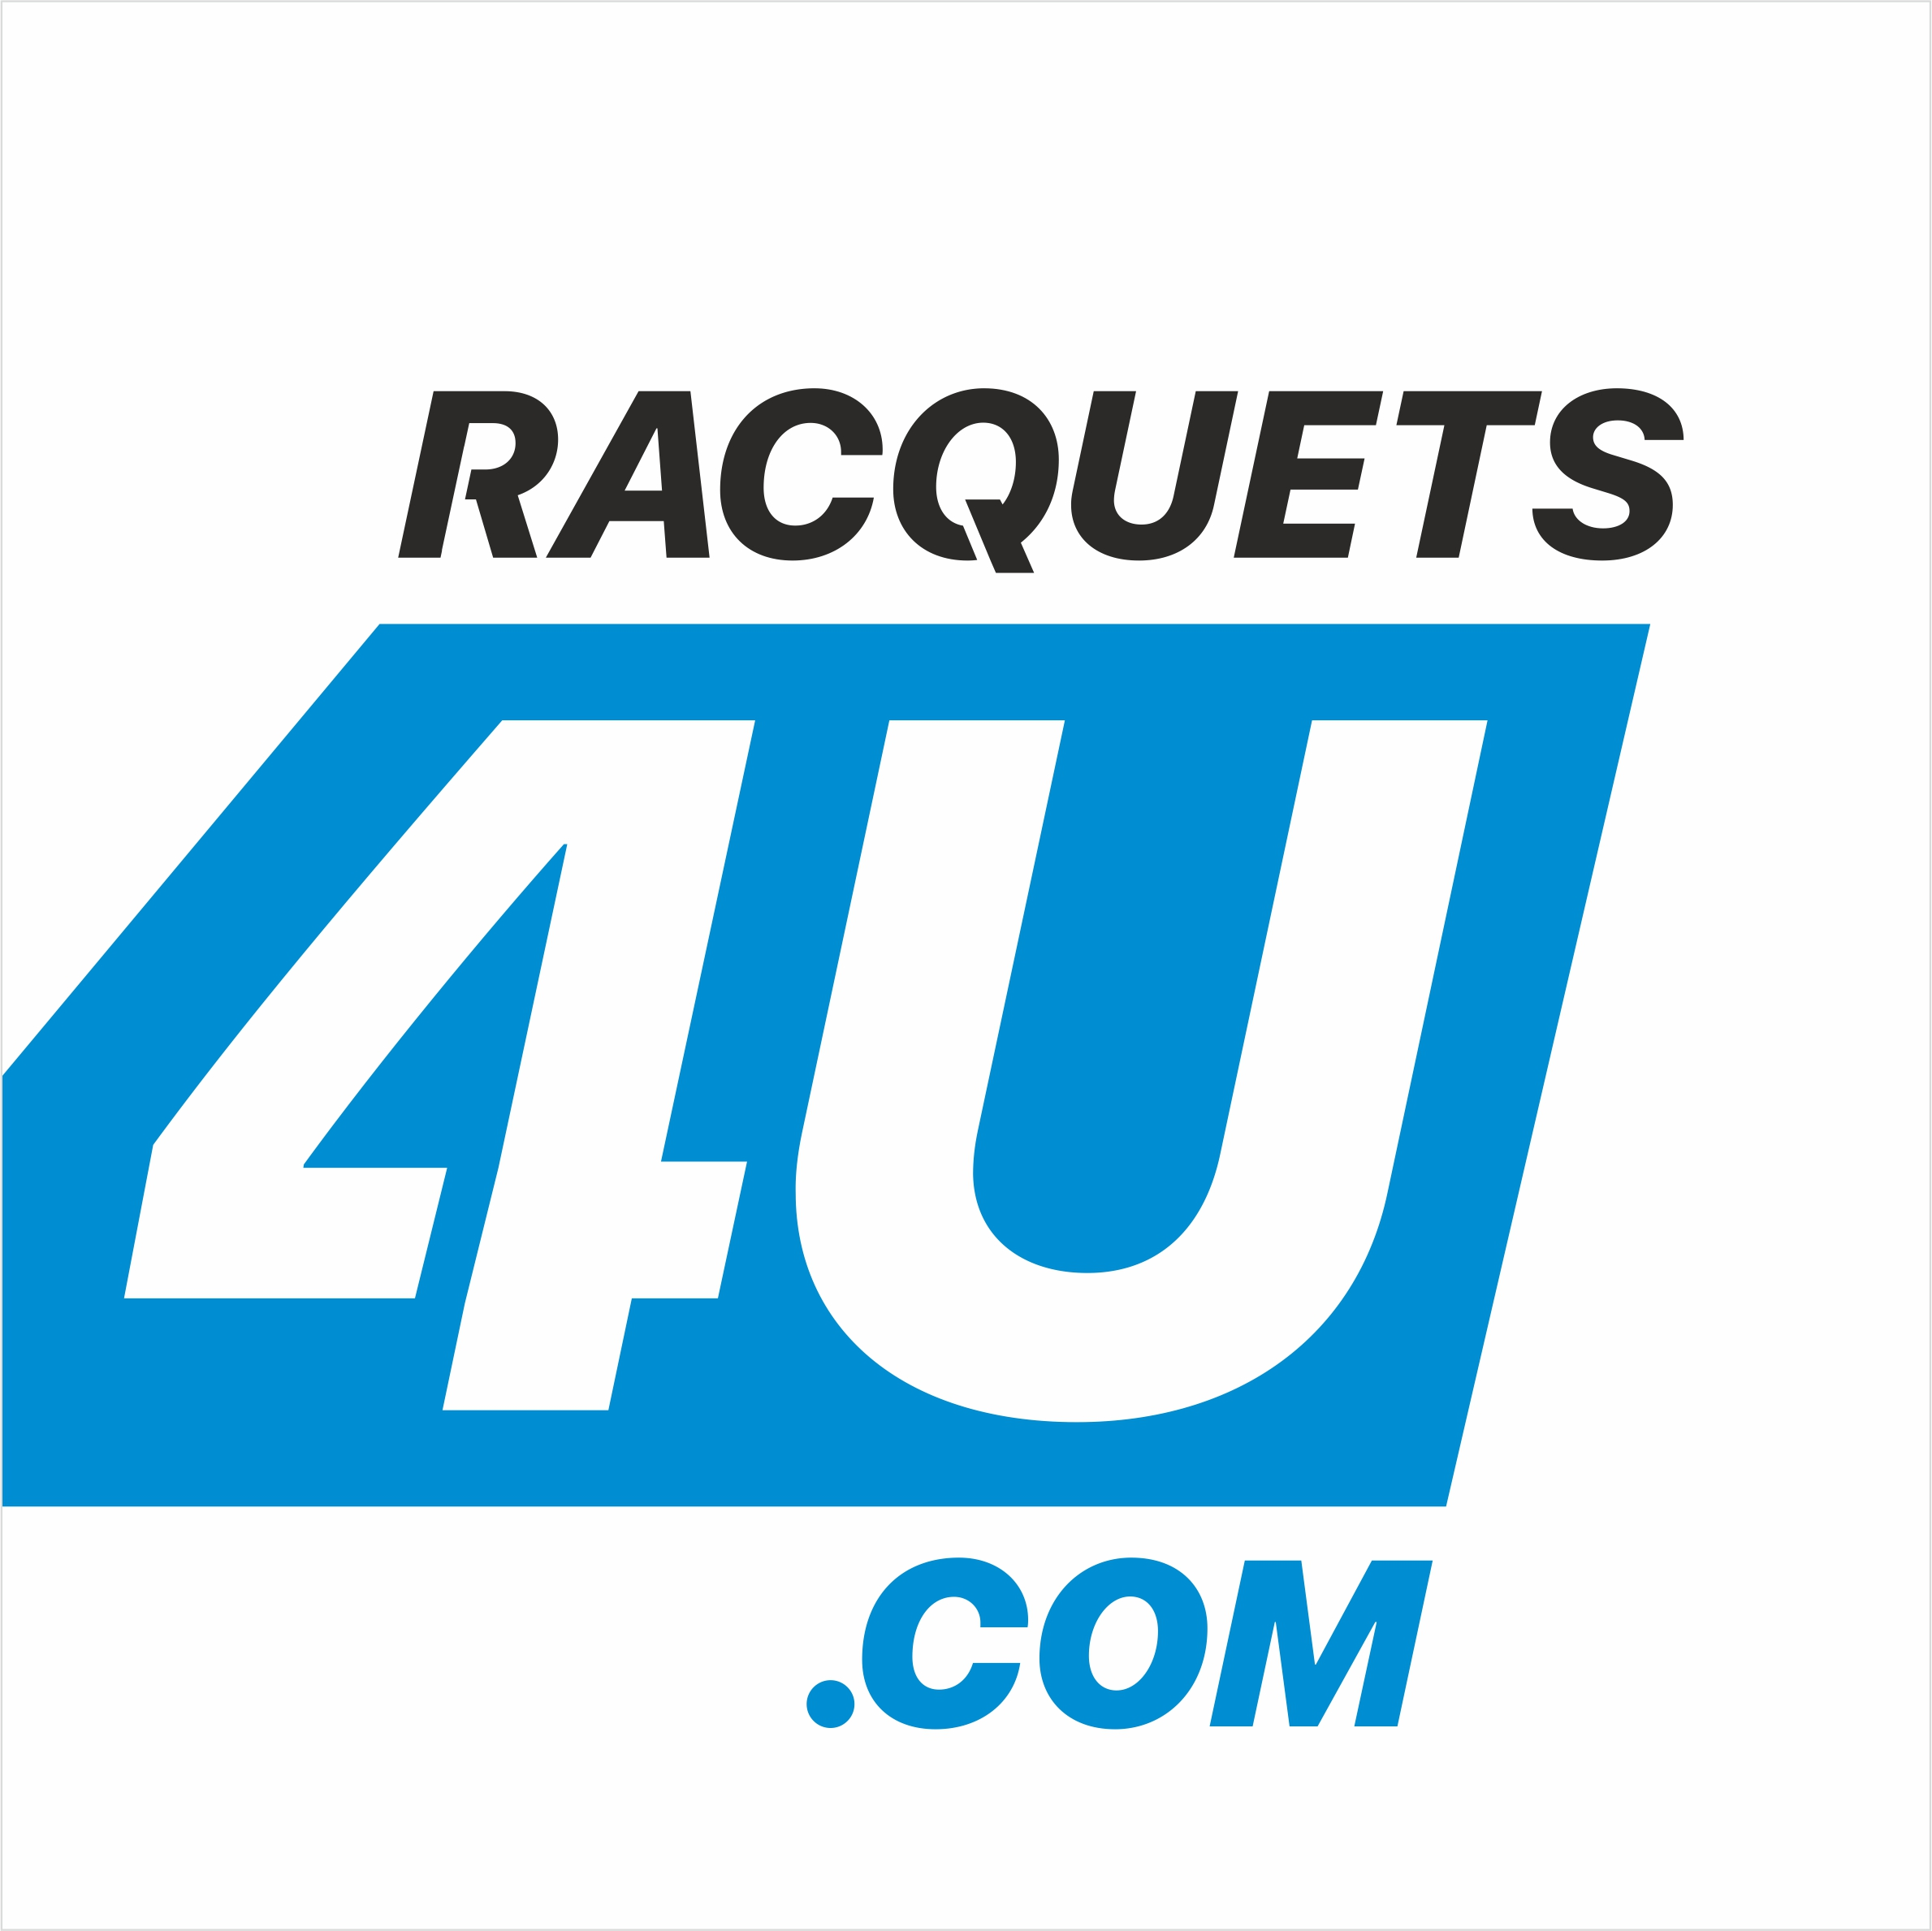 Racquets 4u Logo